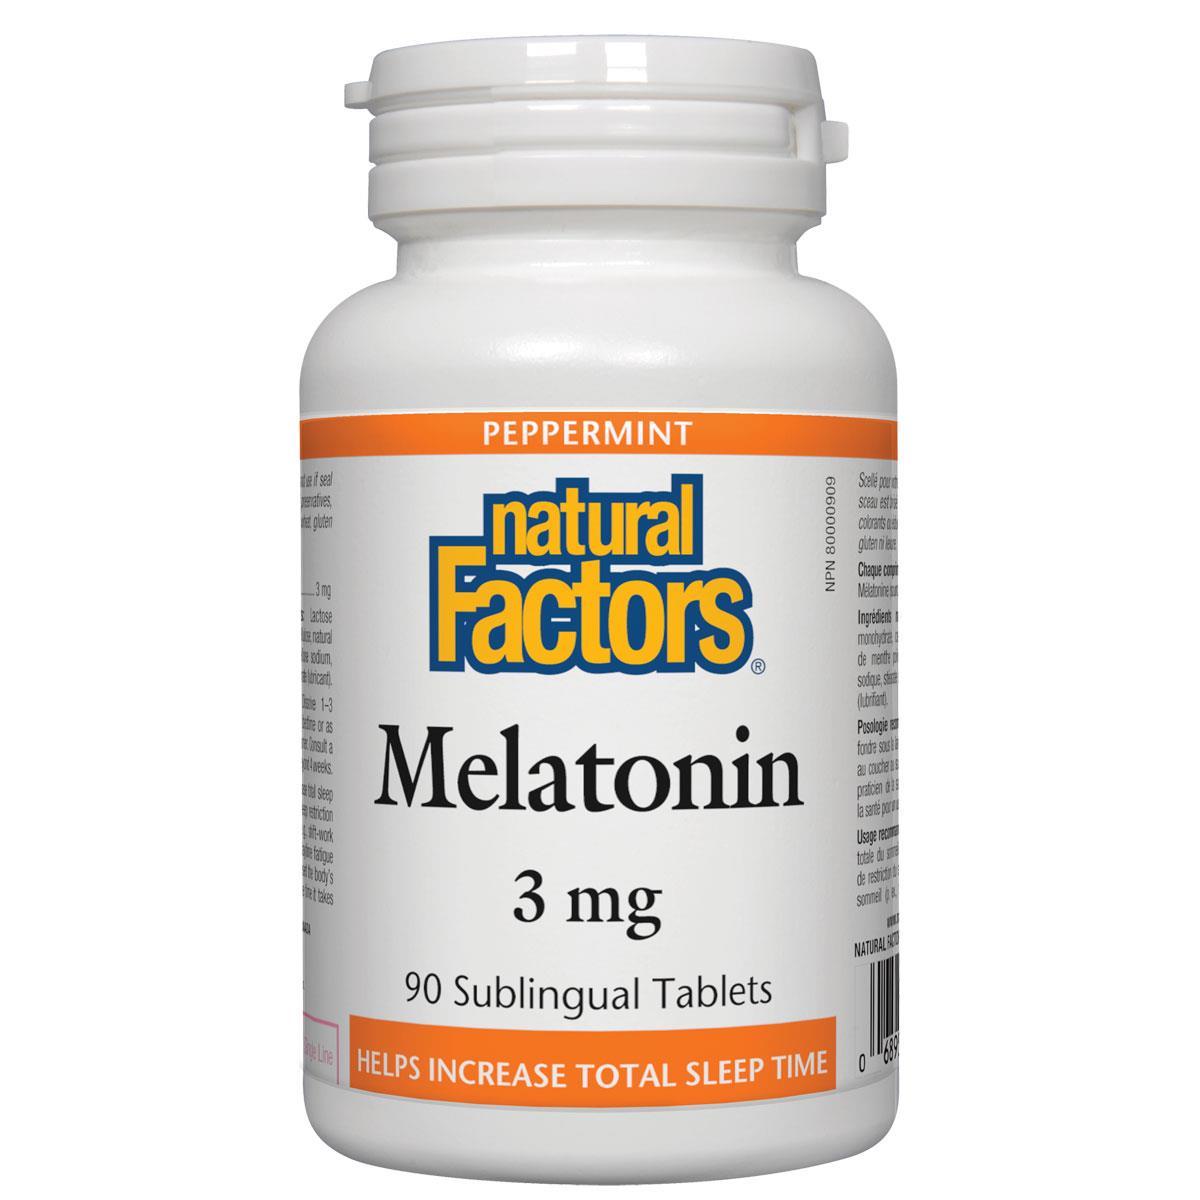 Natural Factors Melatonin (Peppermint), 3mg, 90 Sublingual Tablets